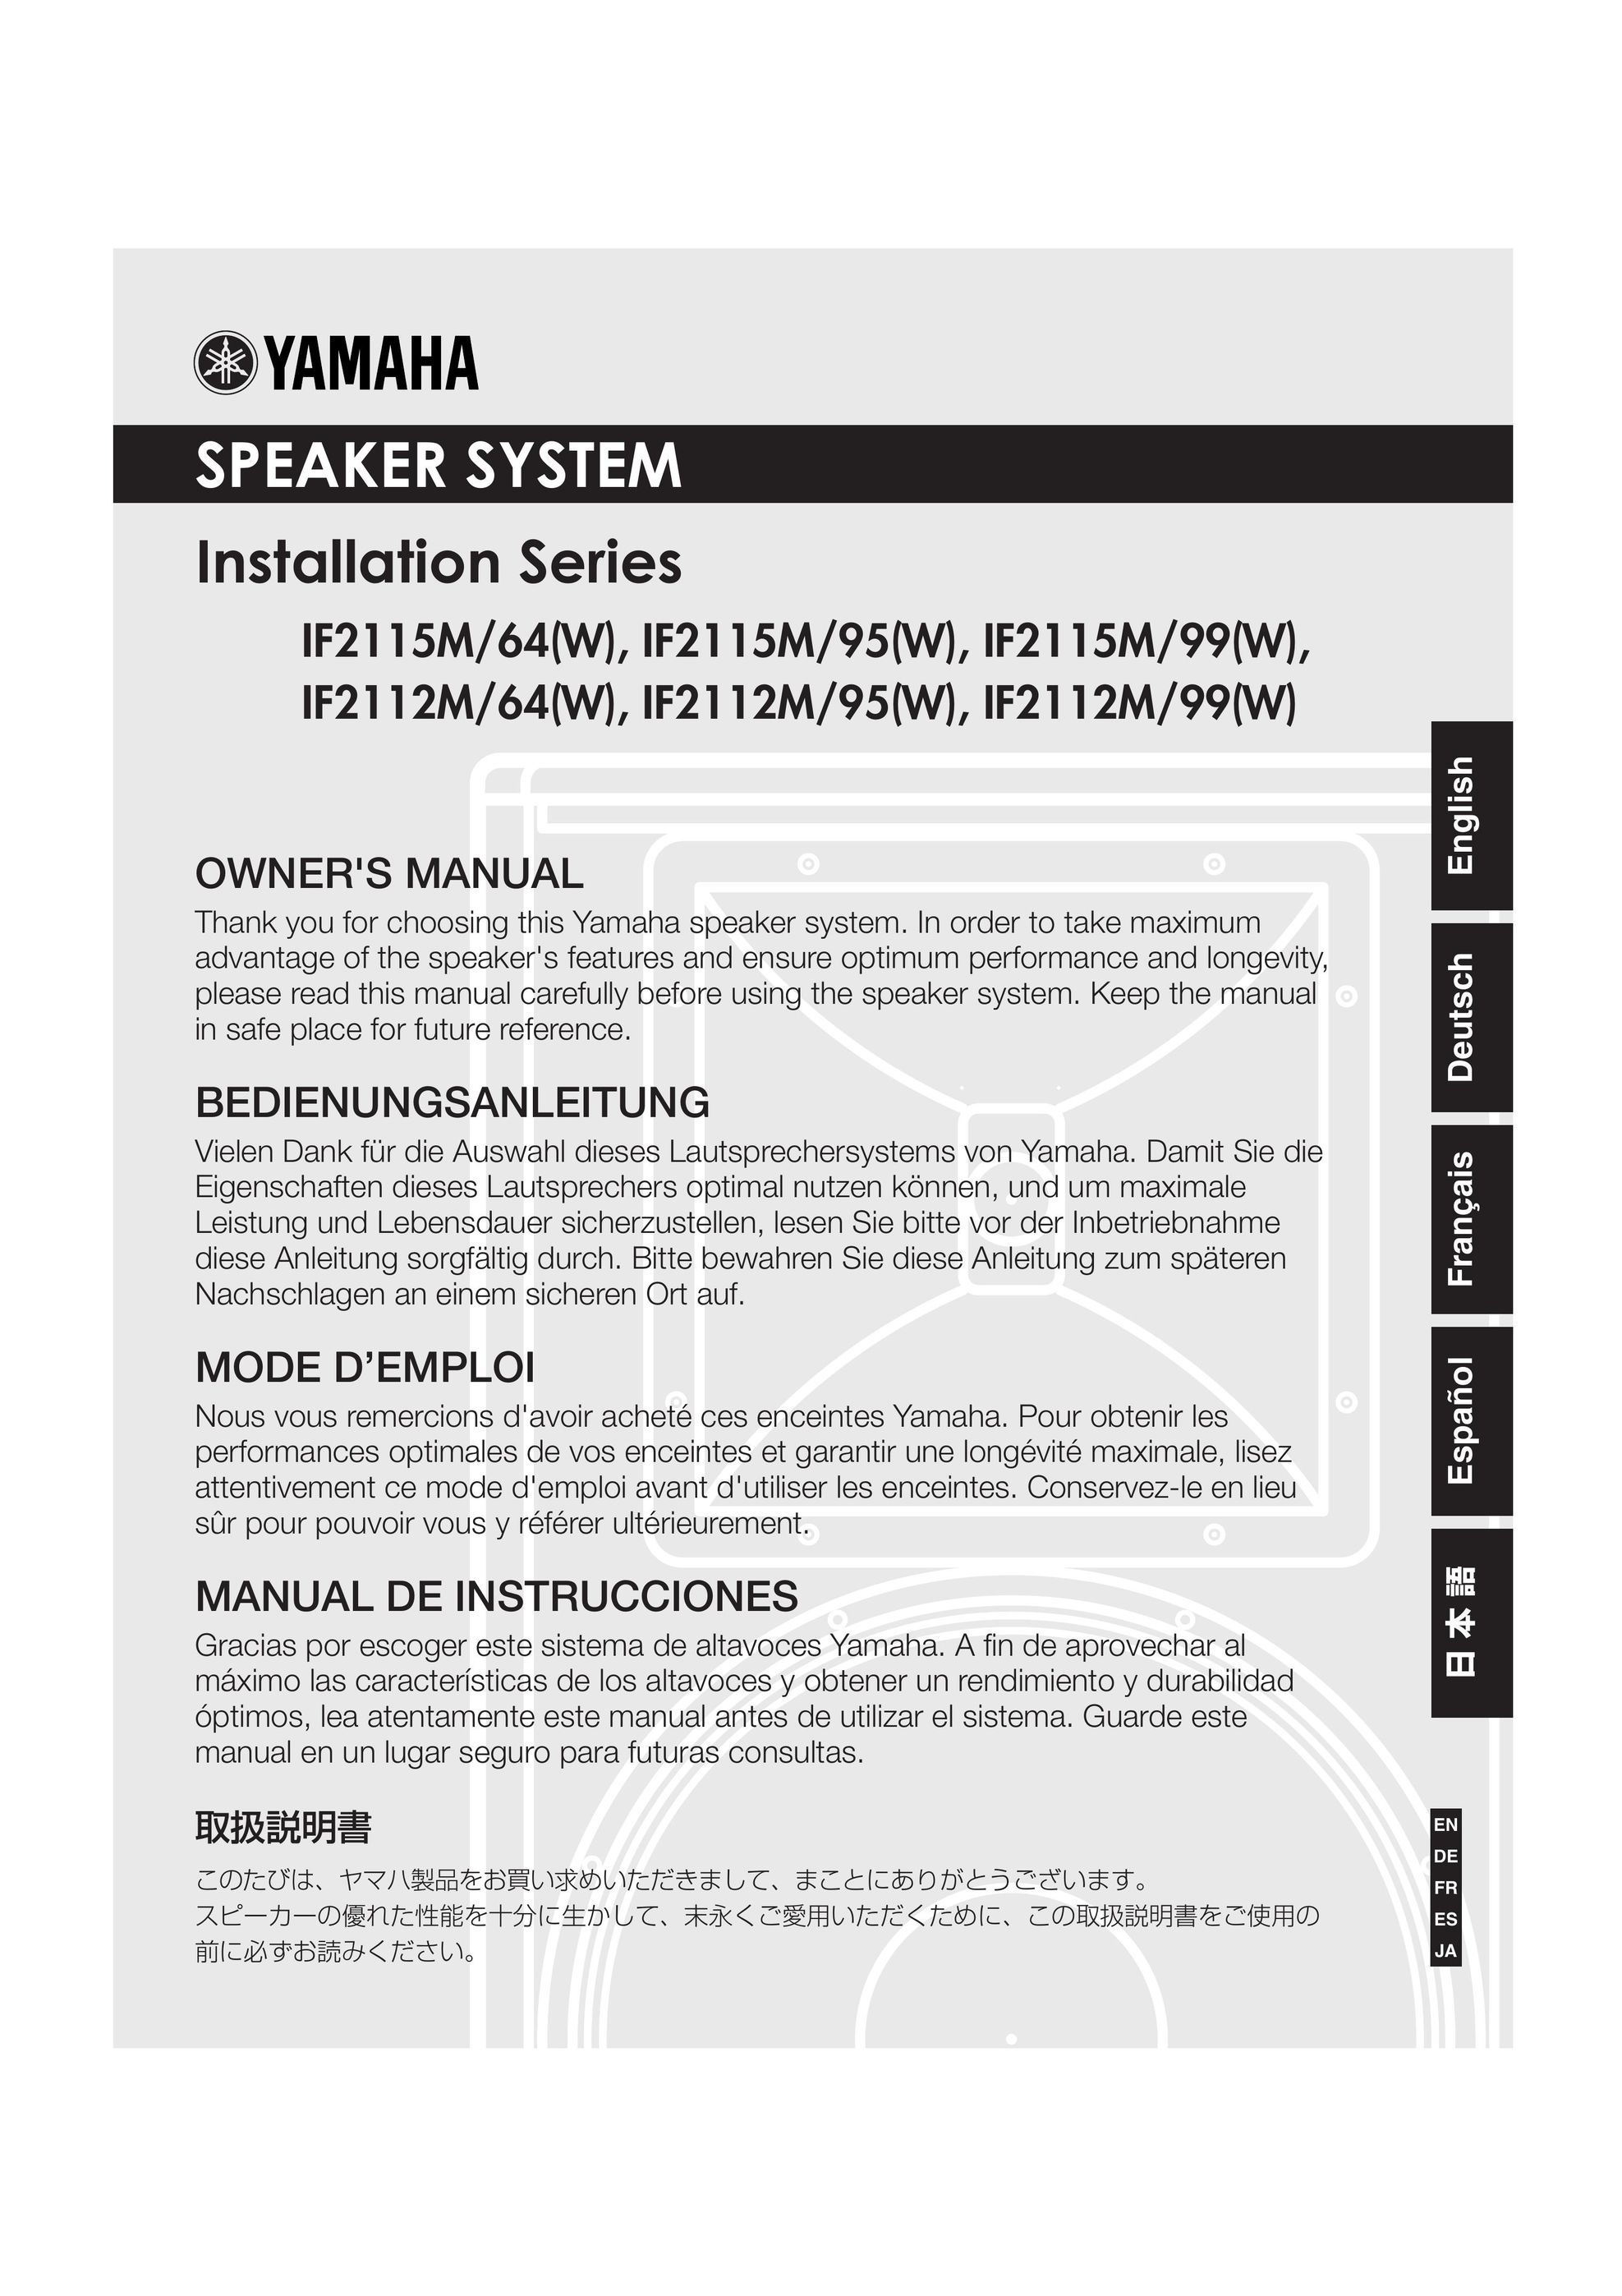 Yamaha IF2115M/95(W) Portable Speaker User Manual